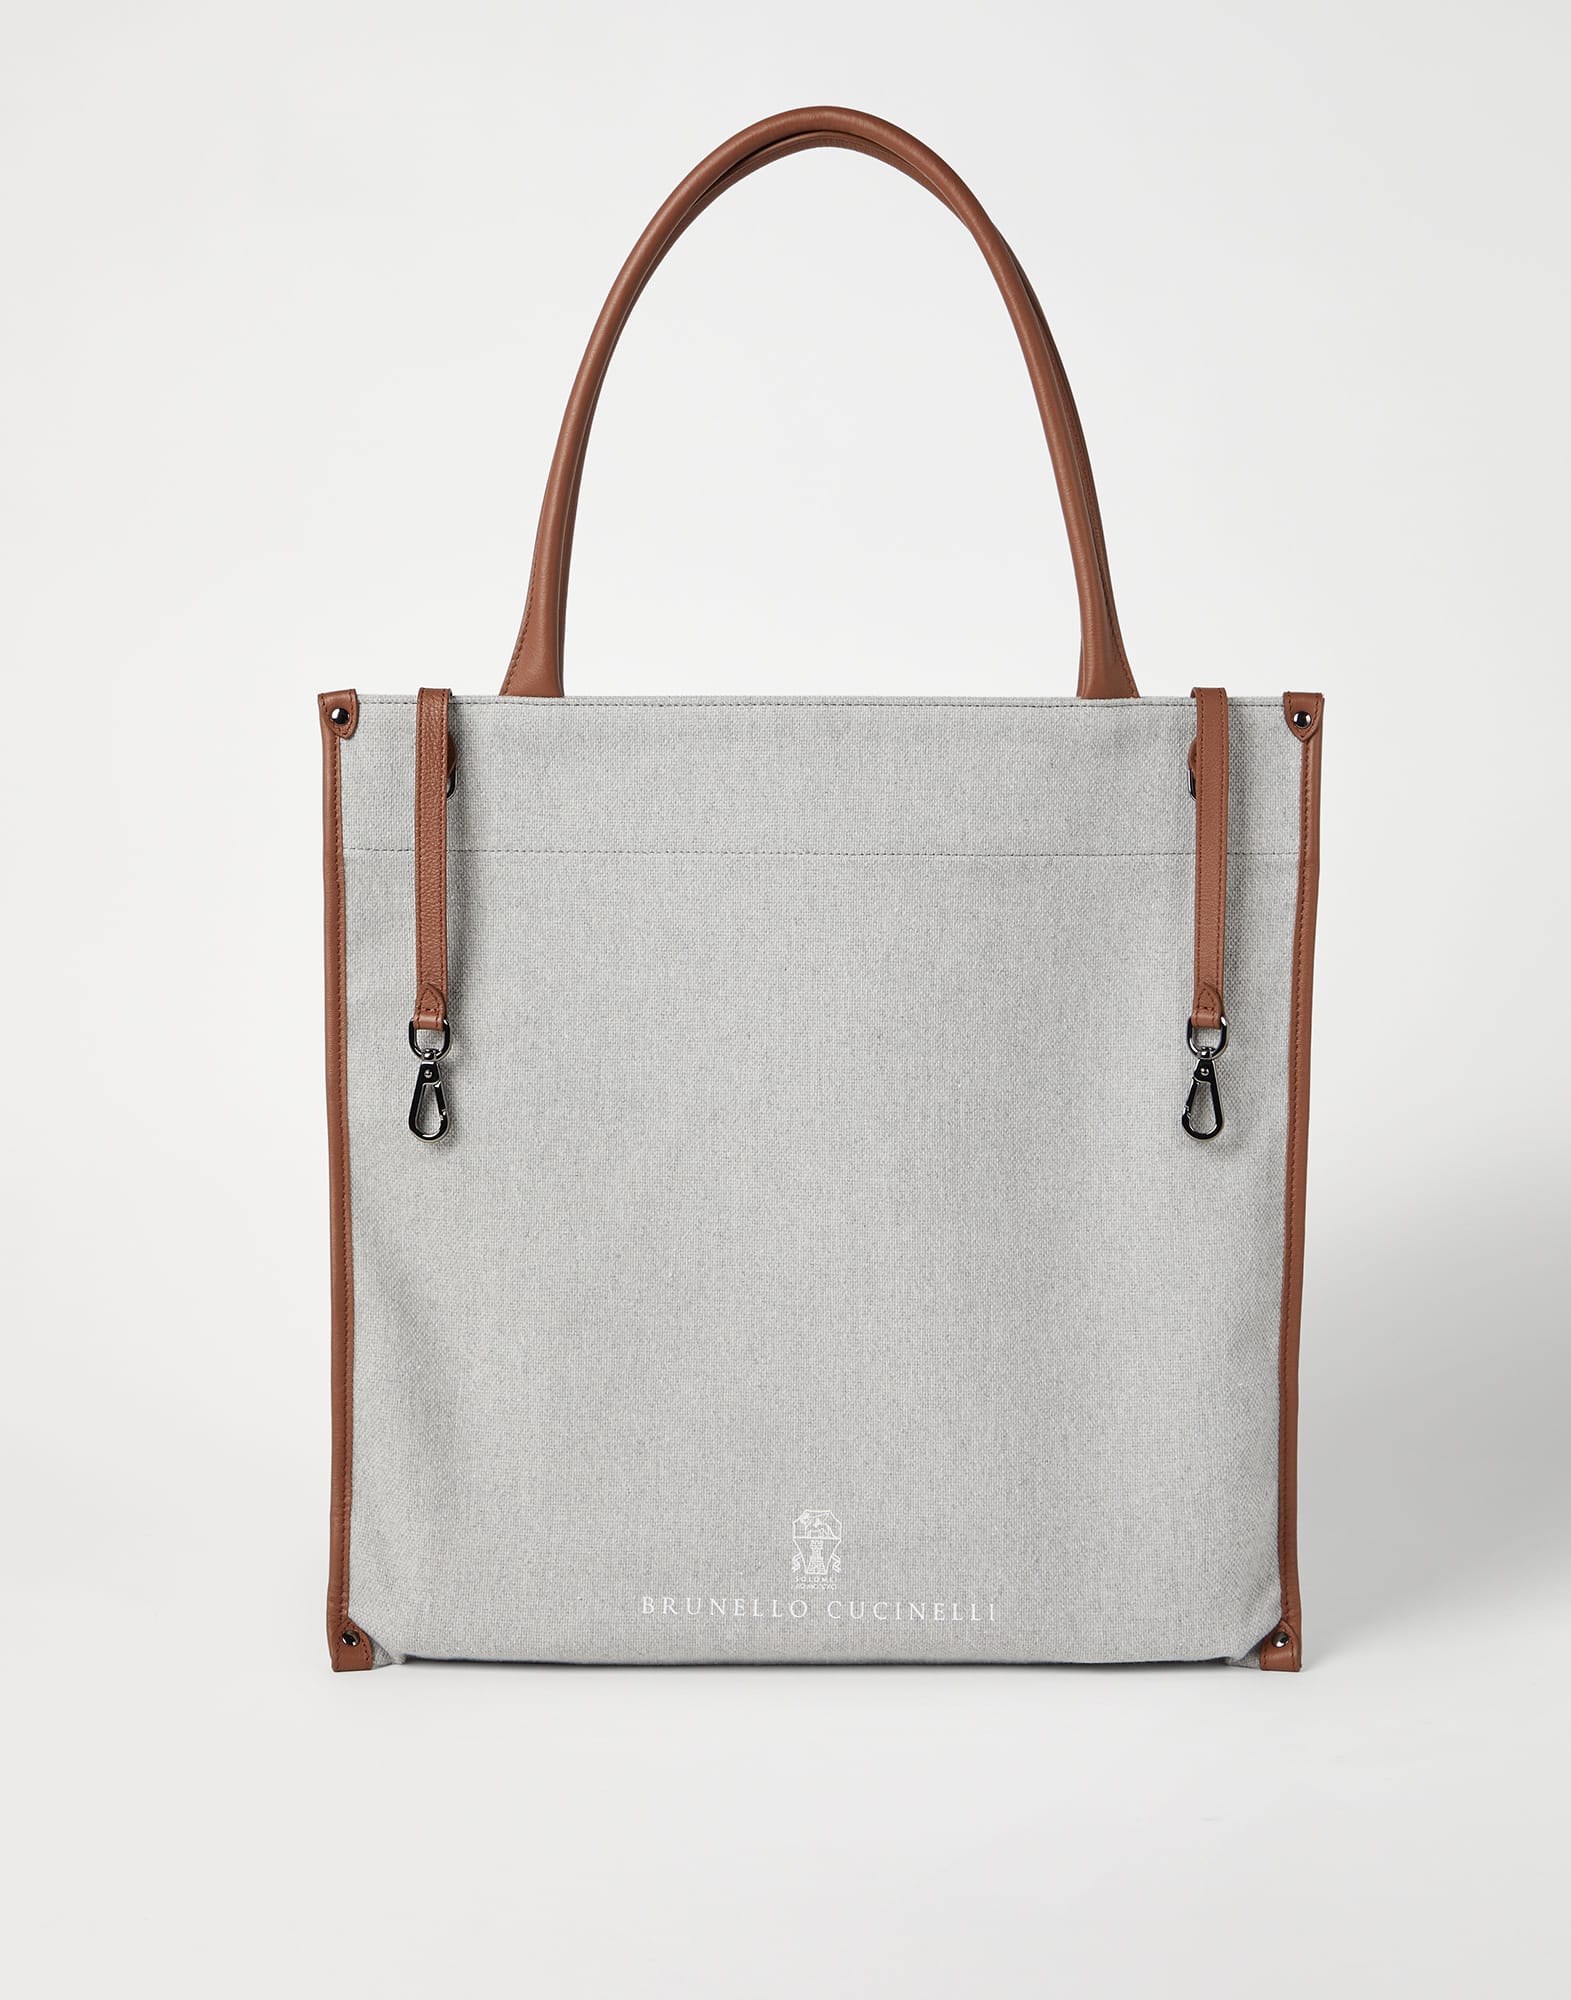 Ulyana Sergeenko 042315 Hermès tassle bag #Luxurydotcom | Сумки, Женская  сумочка, Женские сумки